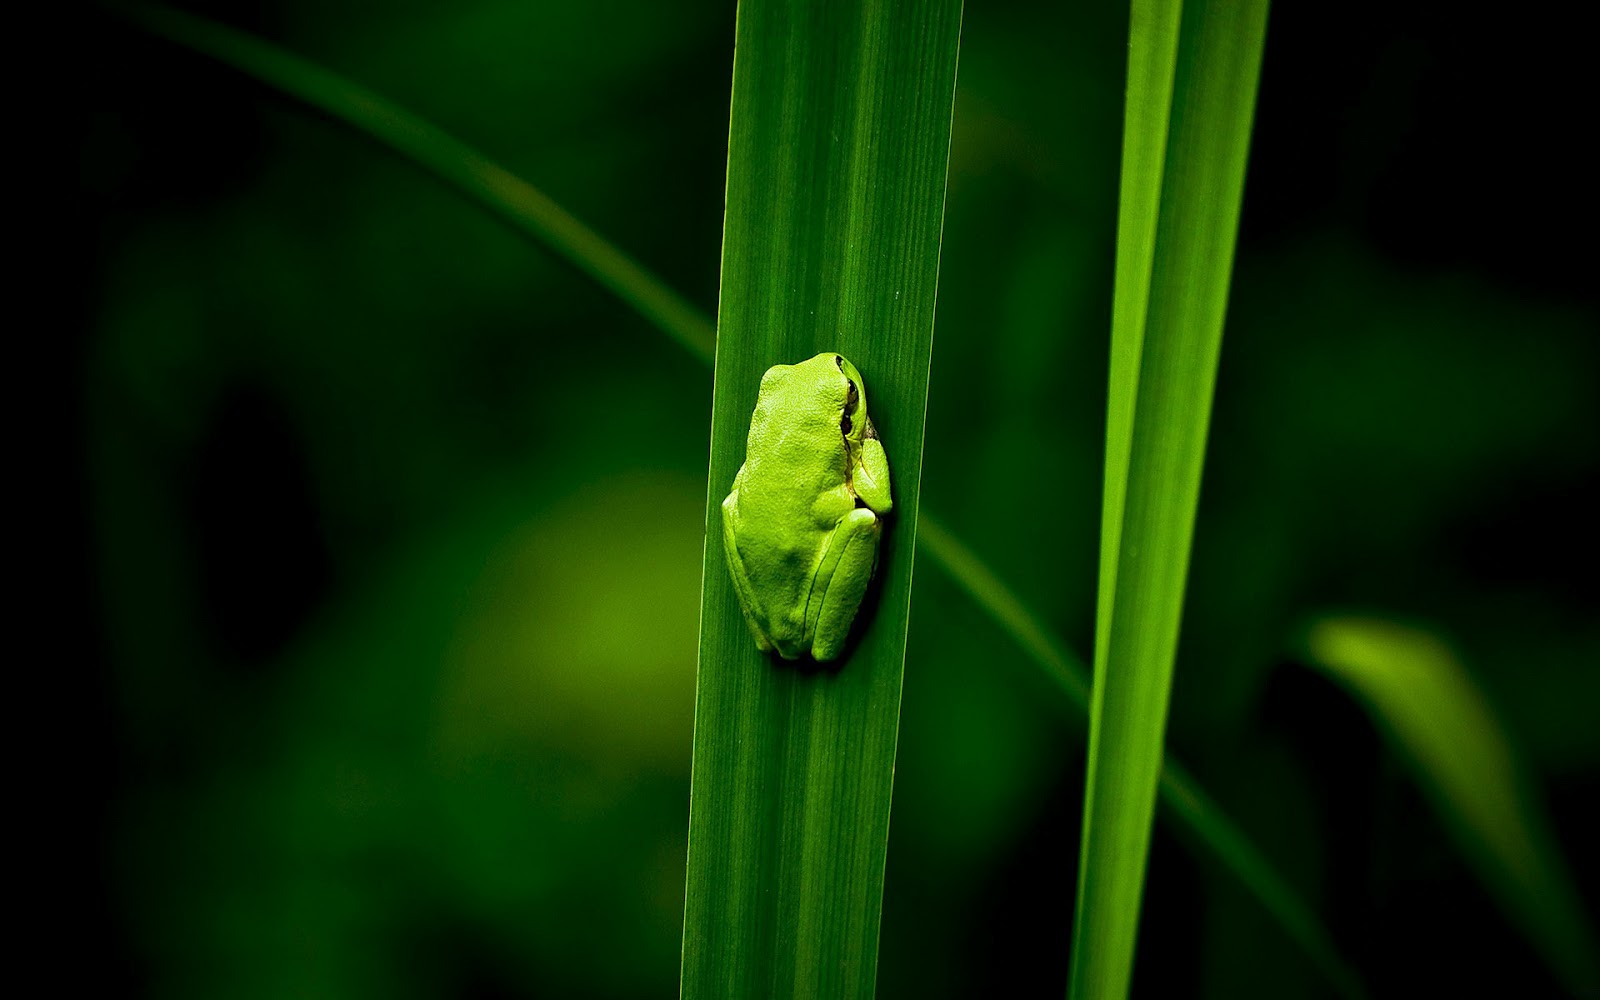 http://1.bp.blogspot.com/-1OLc5c1OvnU/UCQaUSsN_xI/AAAAAAAAAOc/xUknyGubWvw/s1600/hd-frog-wallpaper-with-a-green-frog-on-a-green-leaf-background-picture.jpg